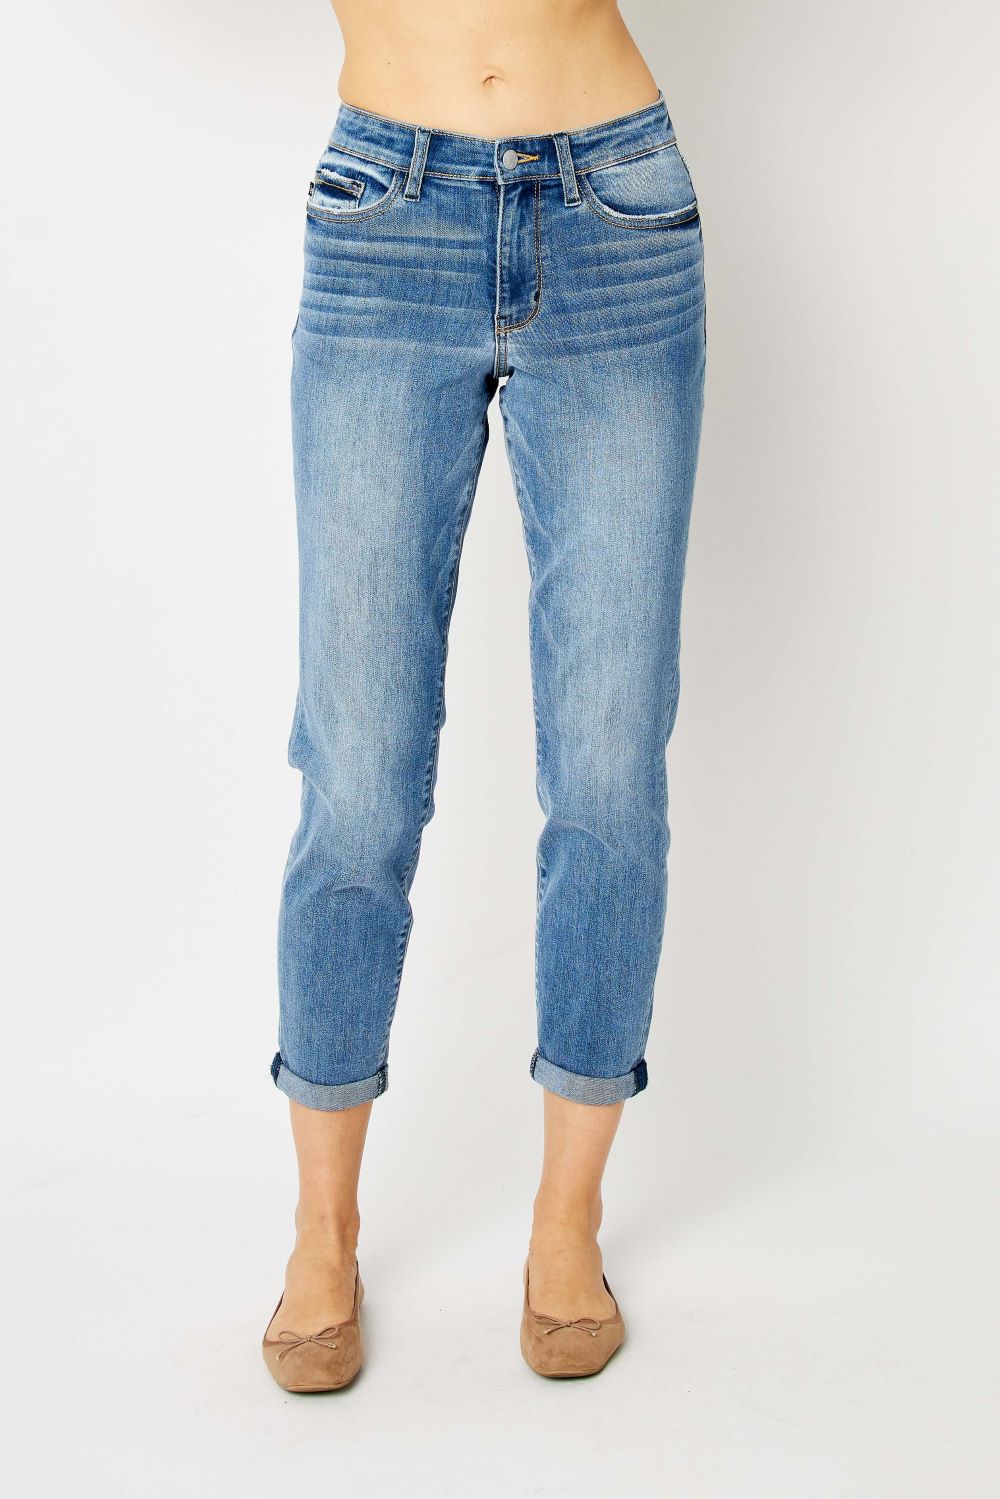 'Judy Blue' Women's Slim Midrise Cuffed Jeans - Medium Blue Wash